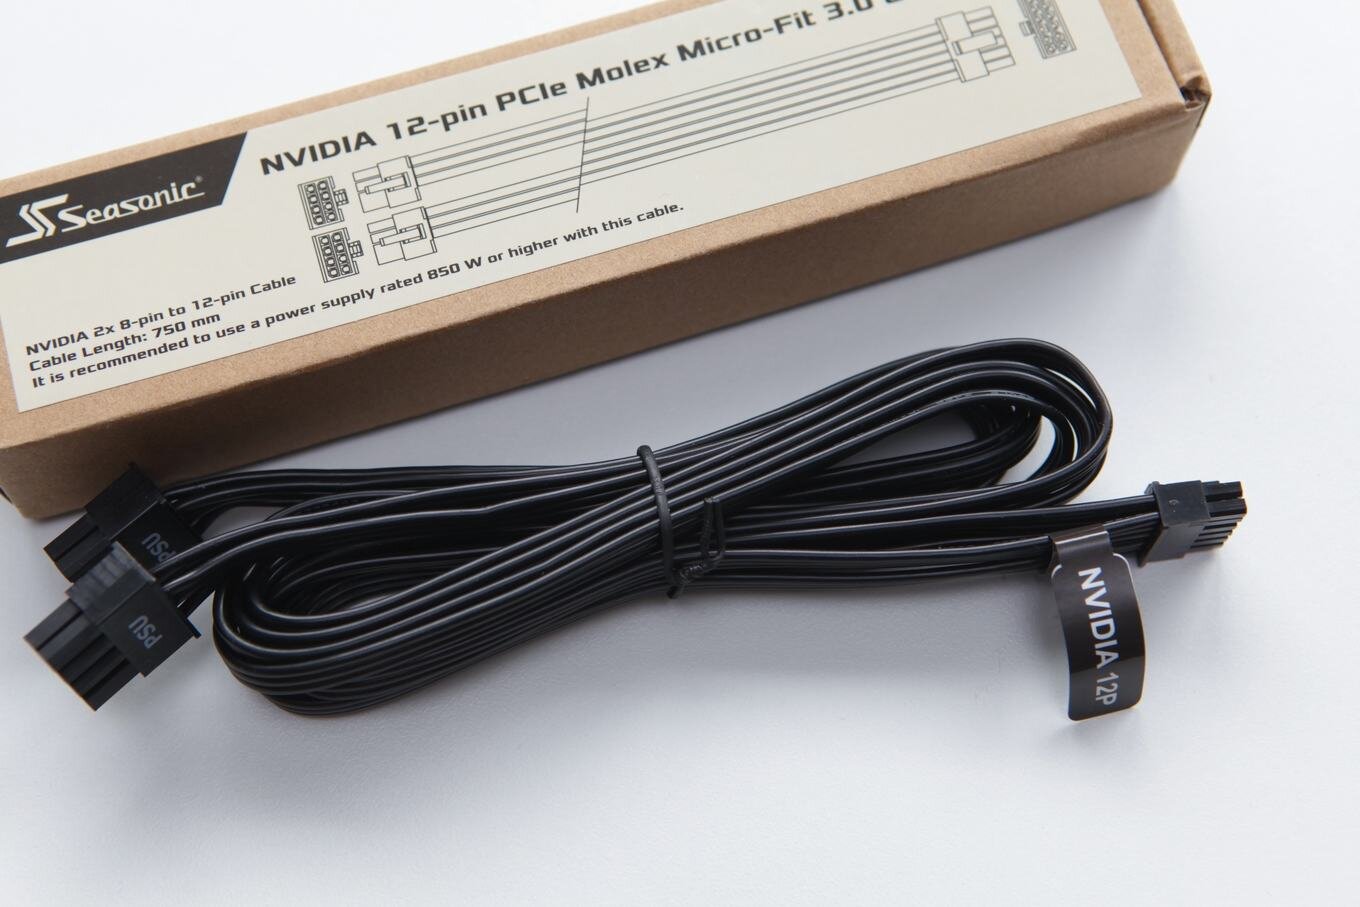 Seasonic-12-Pin-PCIe-Molex-MicroFit-Kabel